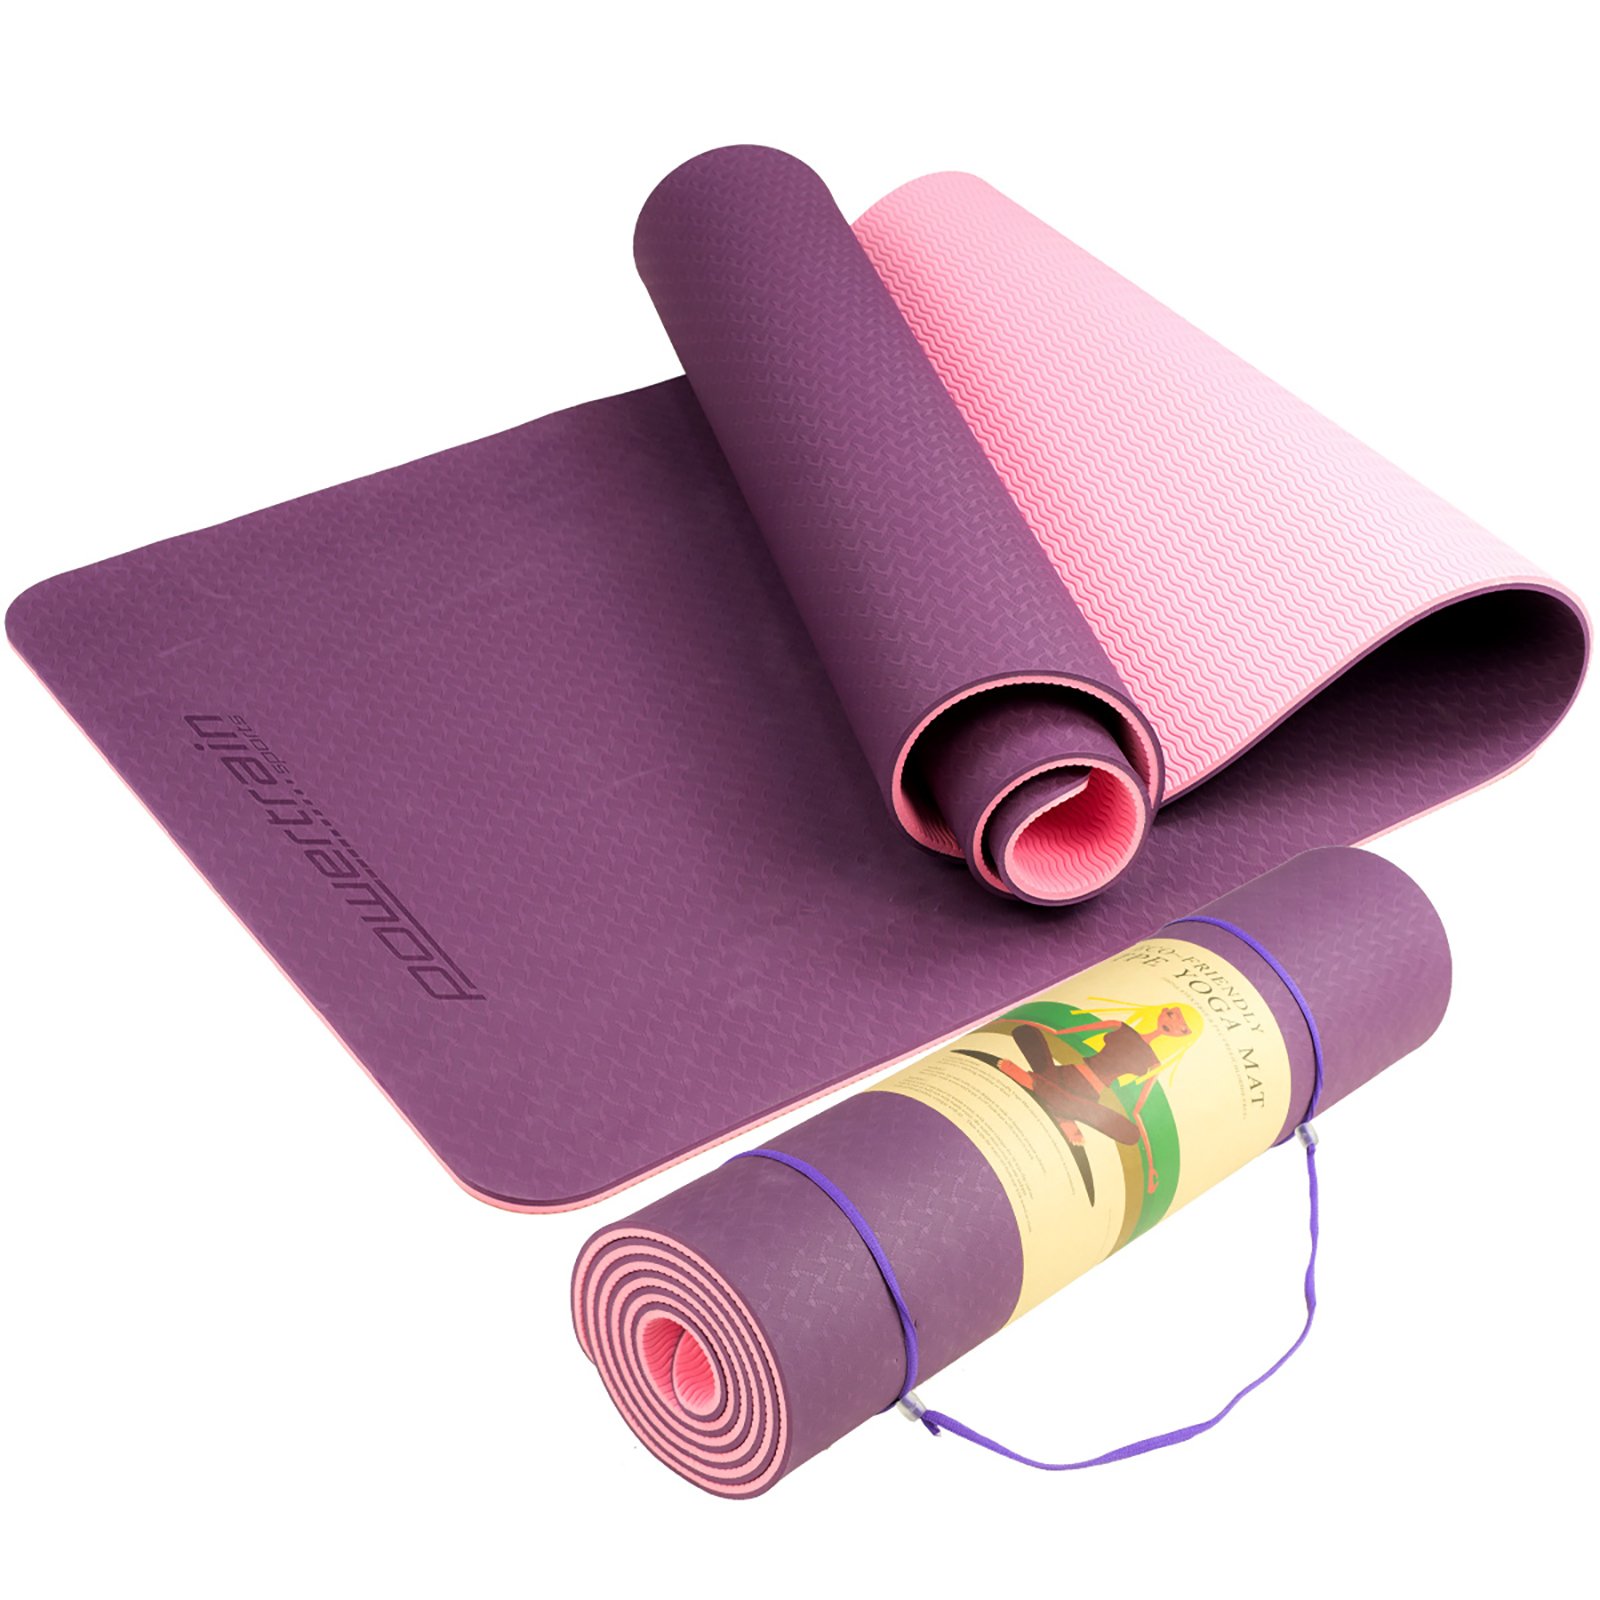 Powertrain Eco-Friendly TPE Pilates Exercise Yoga Mat 8mm - Dark Purple 2